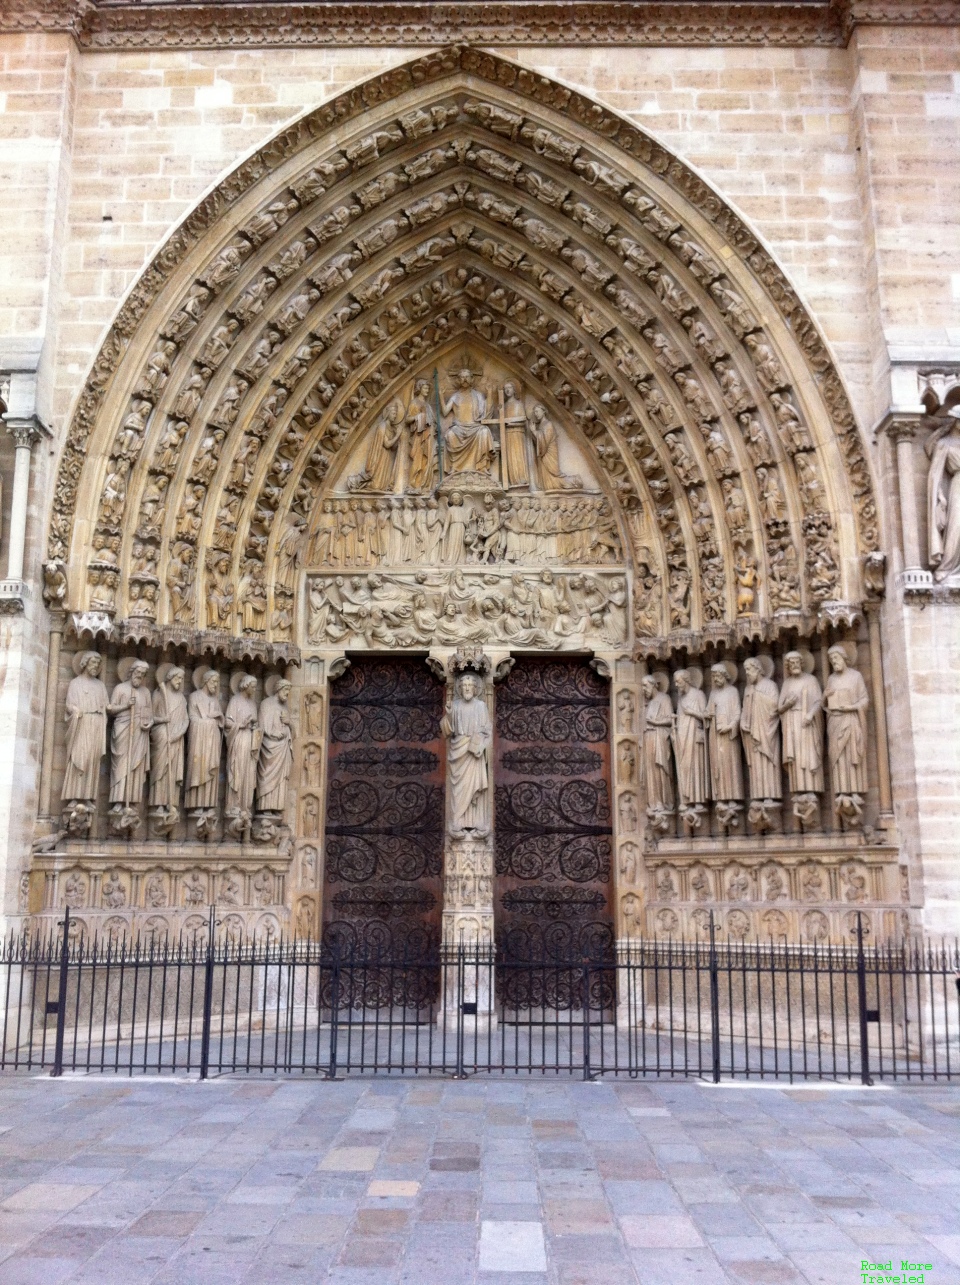 Notre-Dame de Paris door and archway